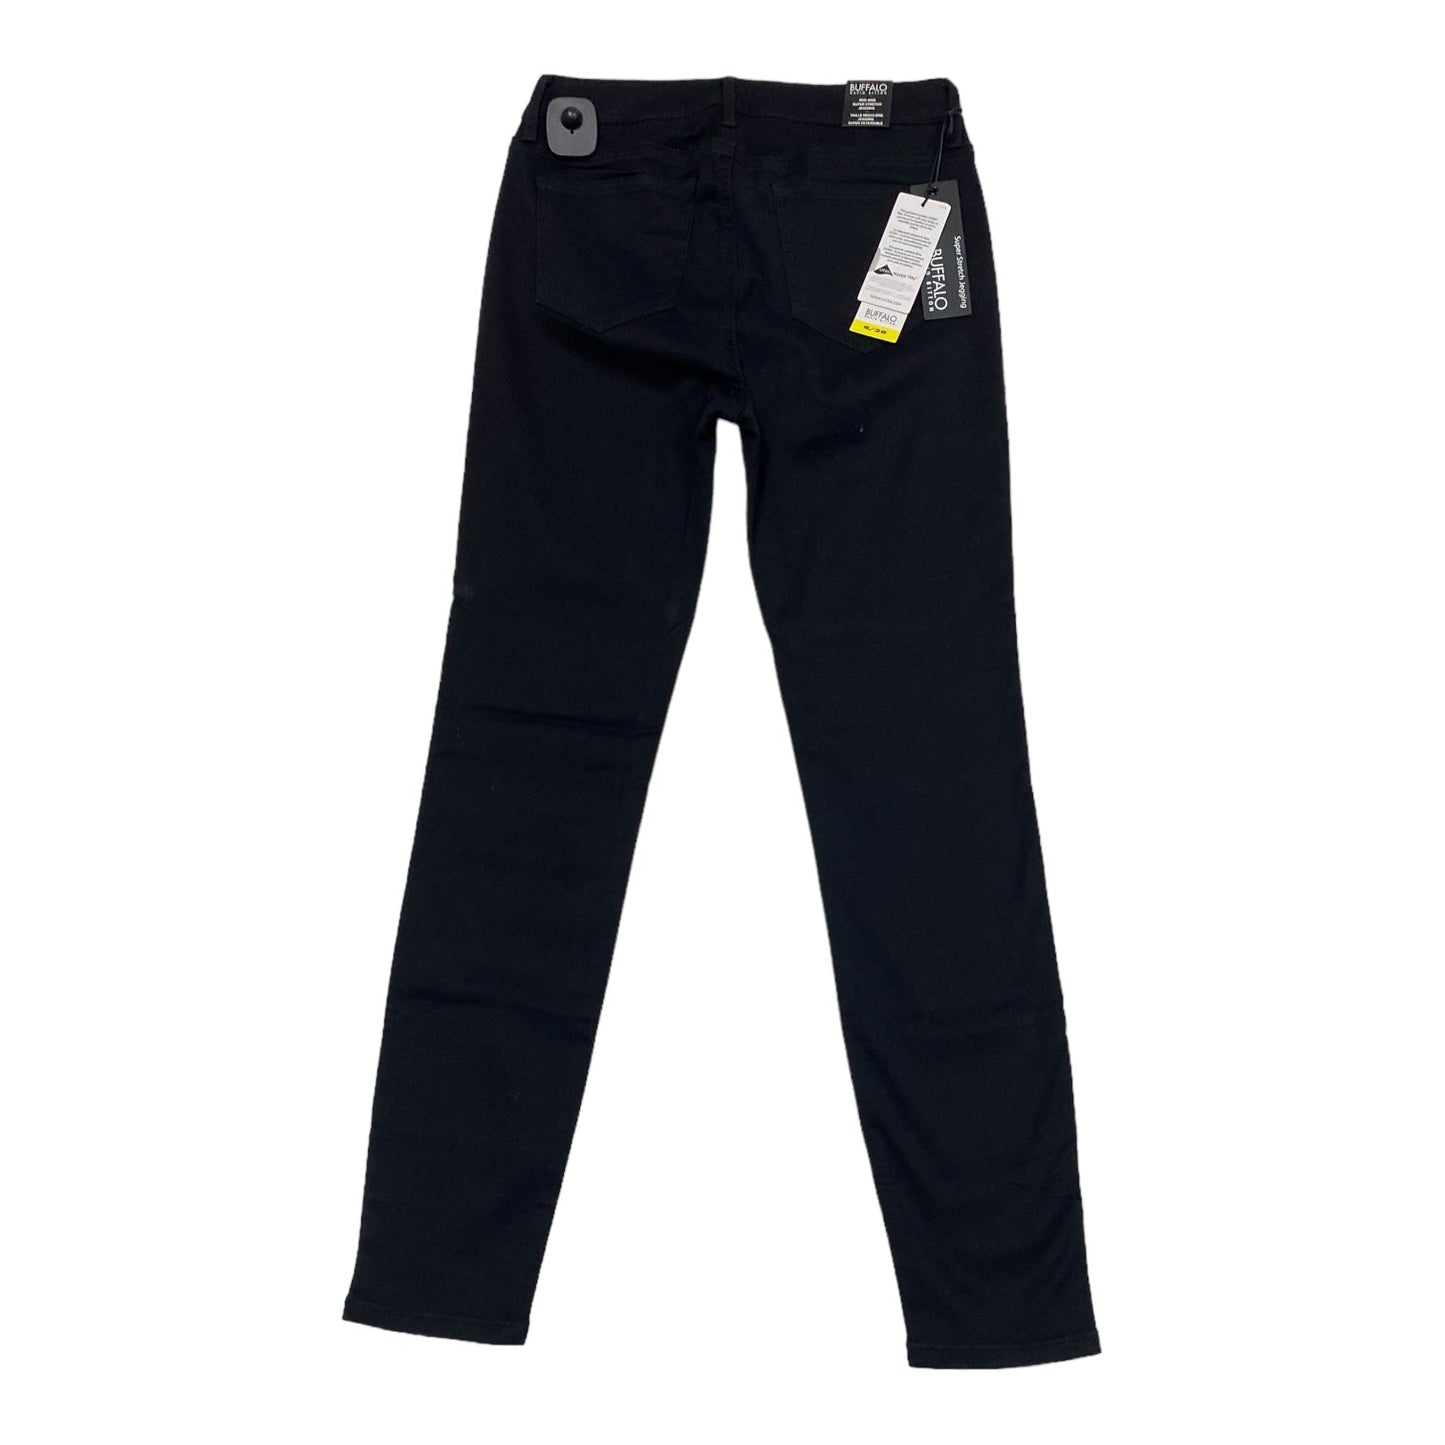 Black Jeans Jeggings Buffalo David Bitton, Size 6